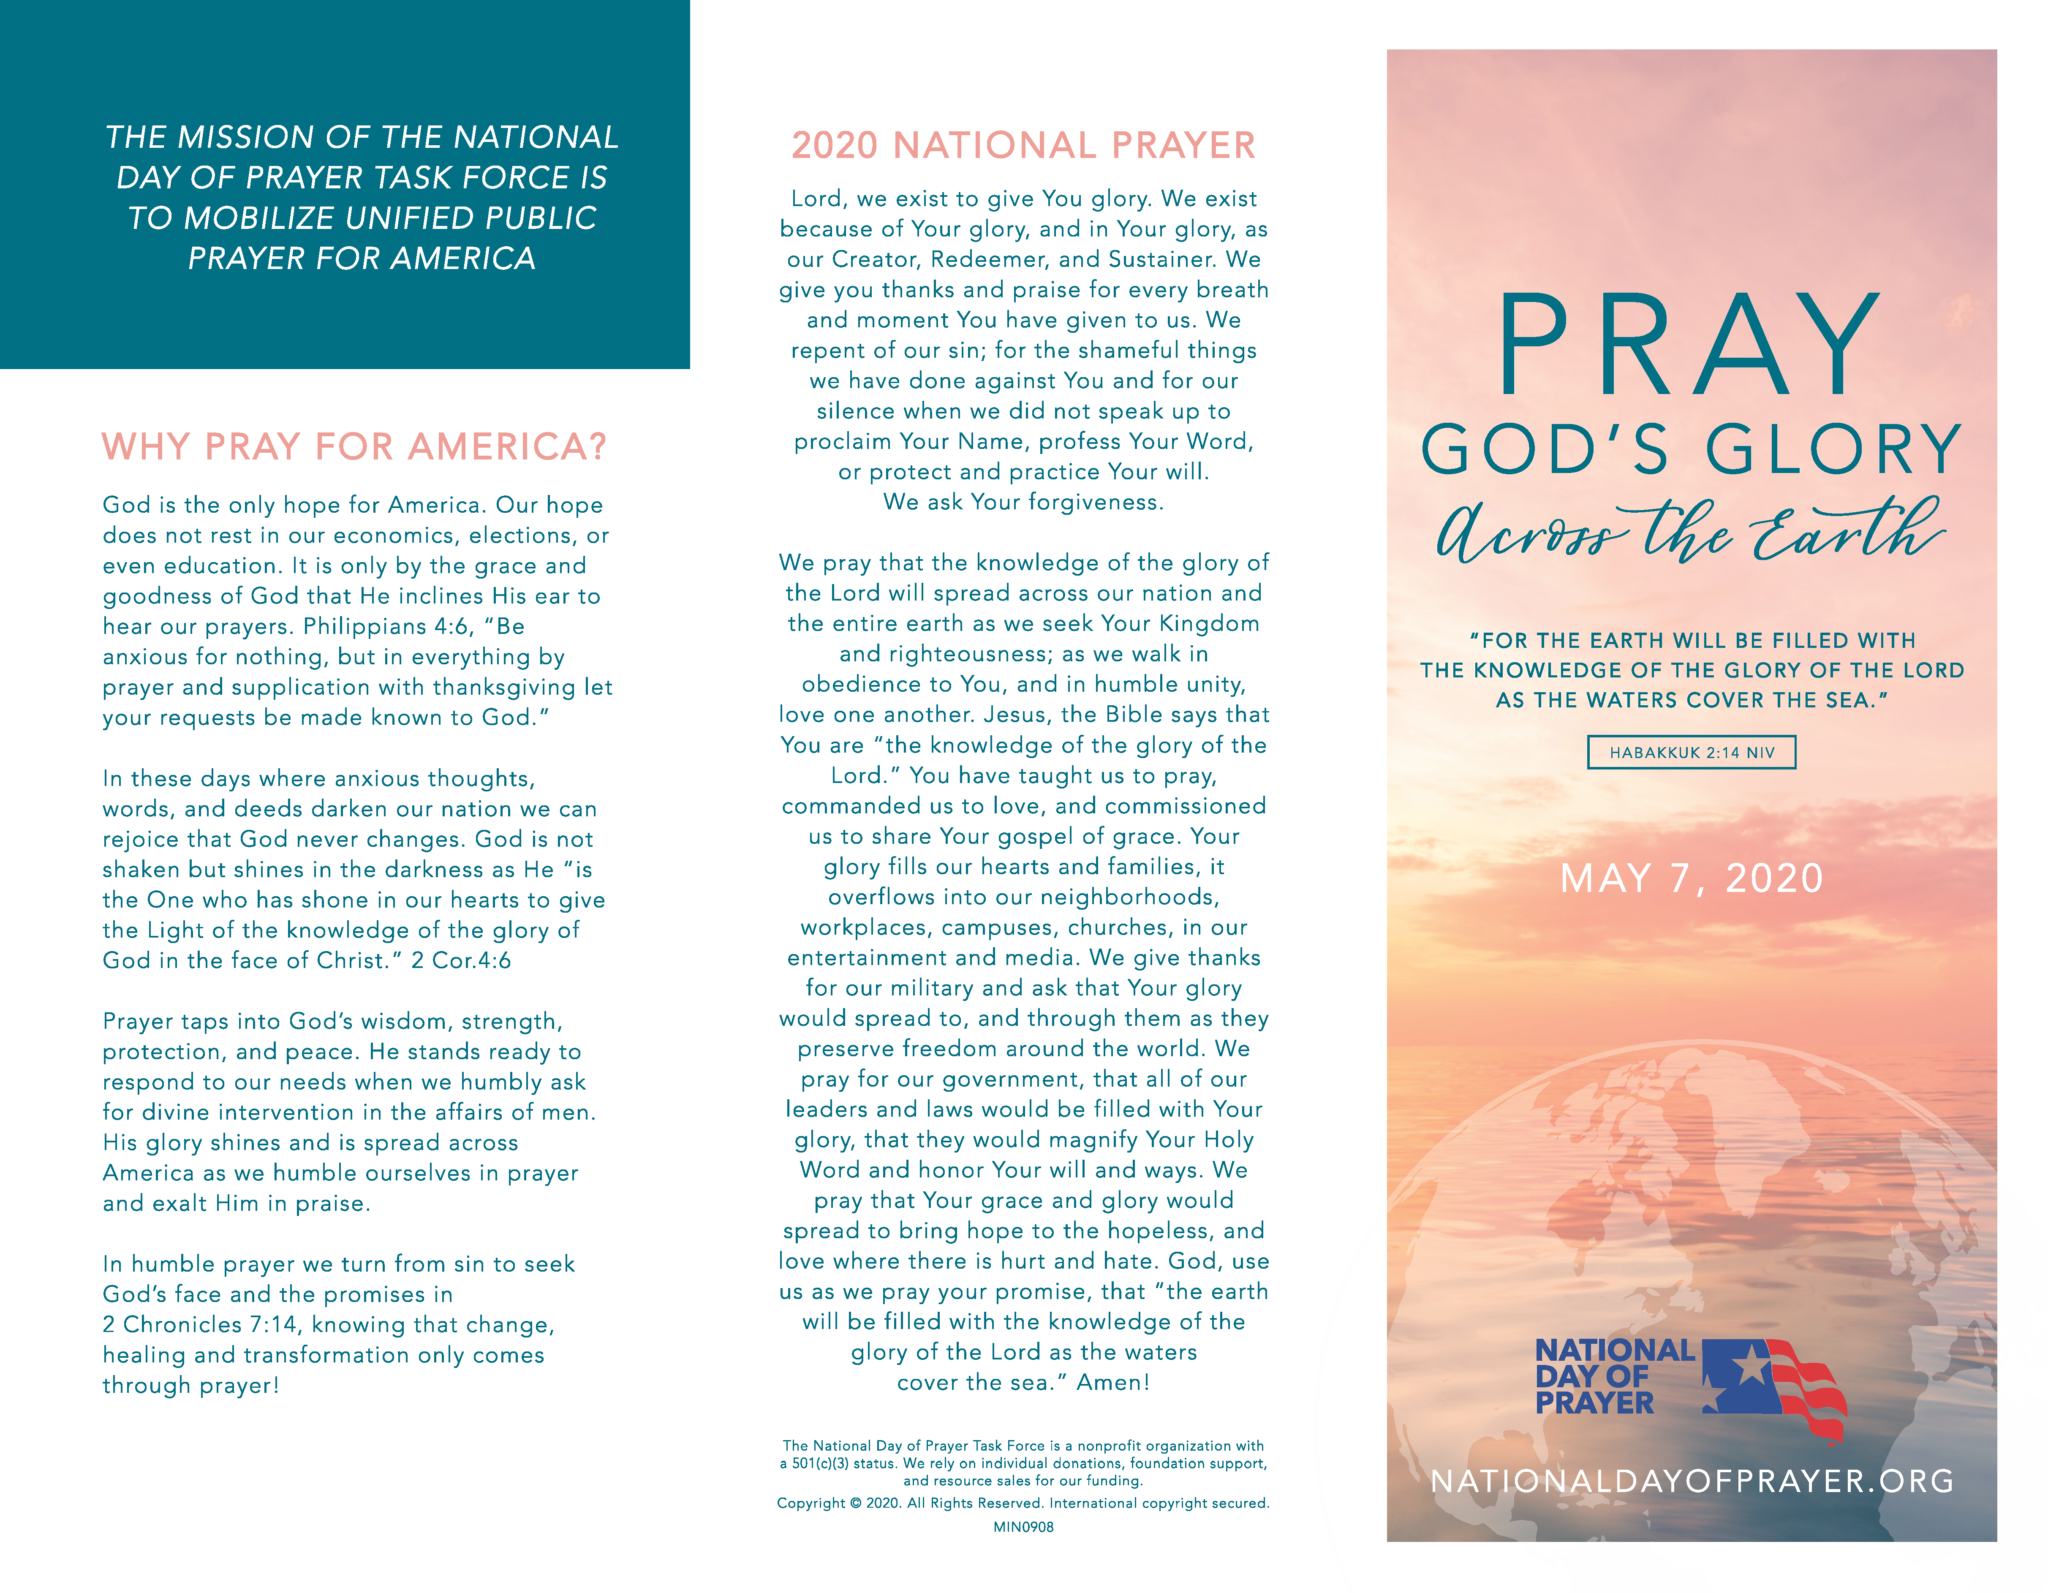 National Day of Prayer Prayer Guide May 7, 2020